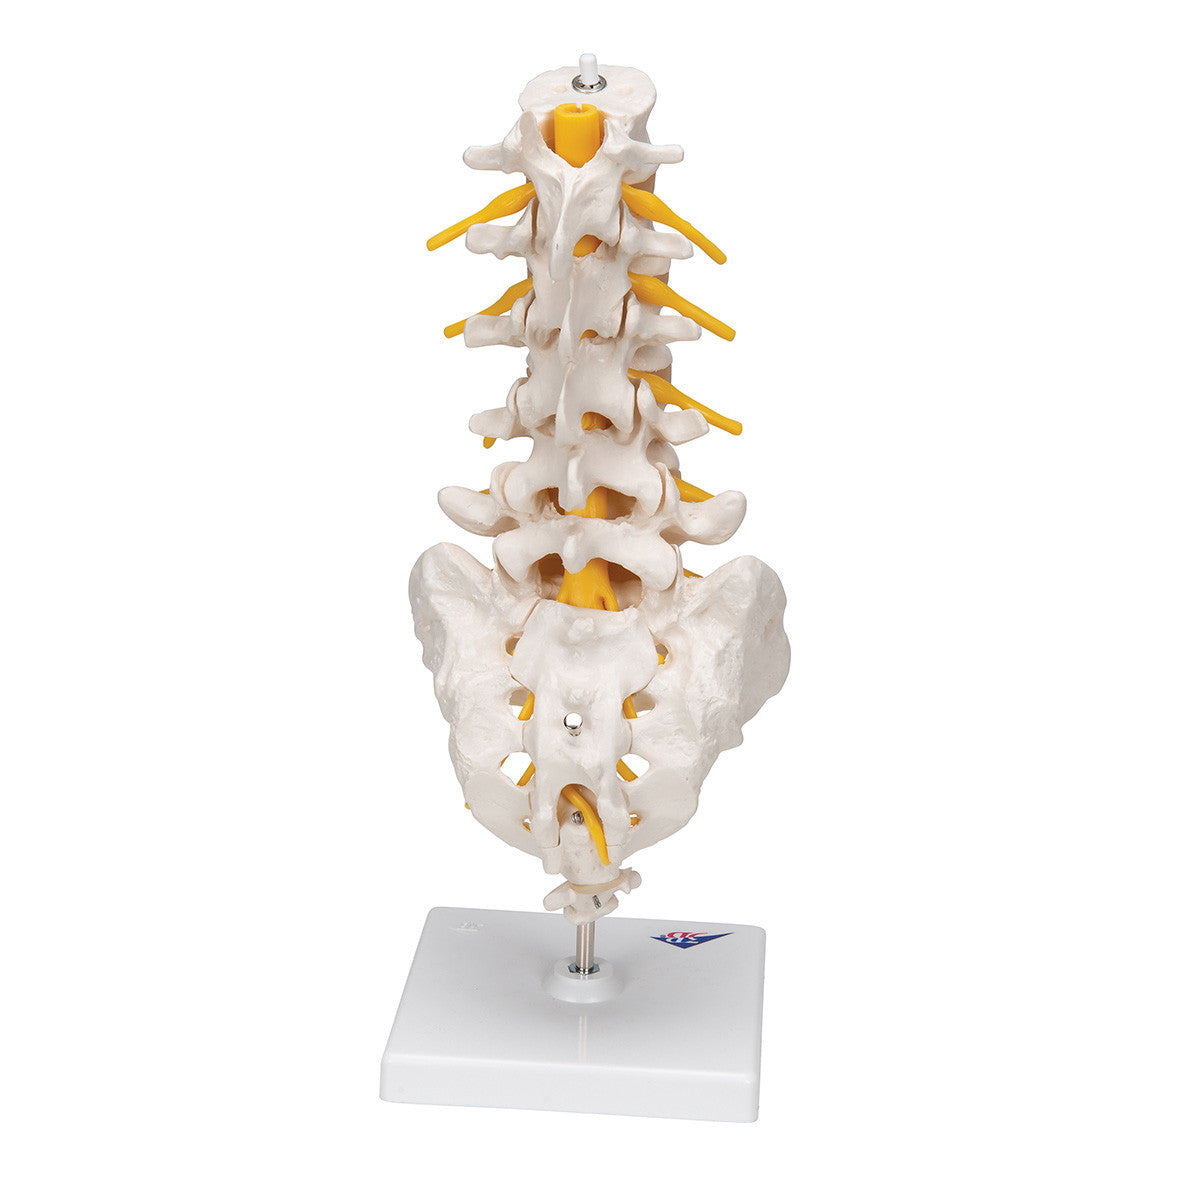 a74_04_1200_1200_lumbar-human-spinal-column-model-3b-smart-anatomy__07153.1589752911.1280.1280.jpg